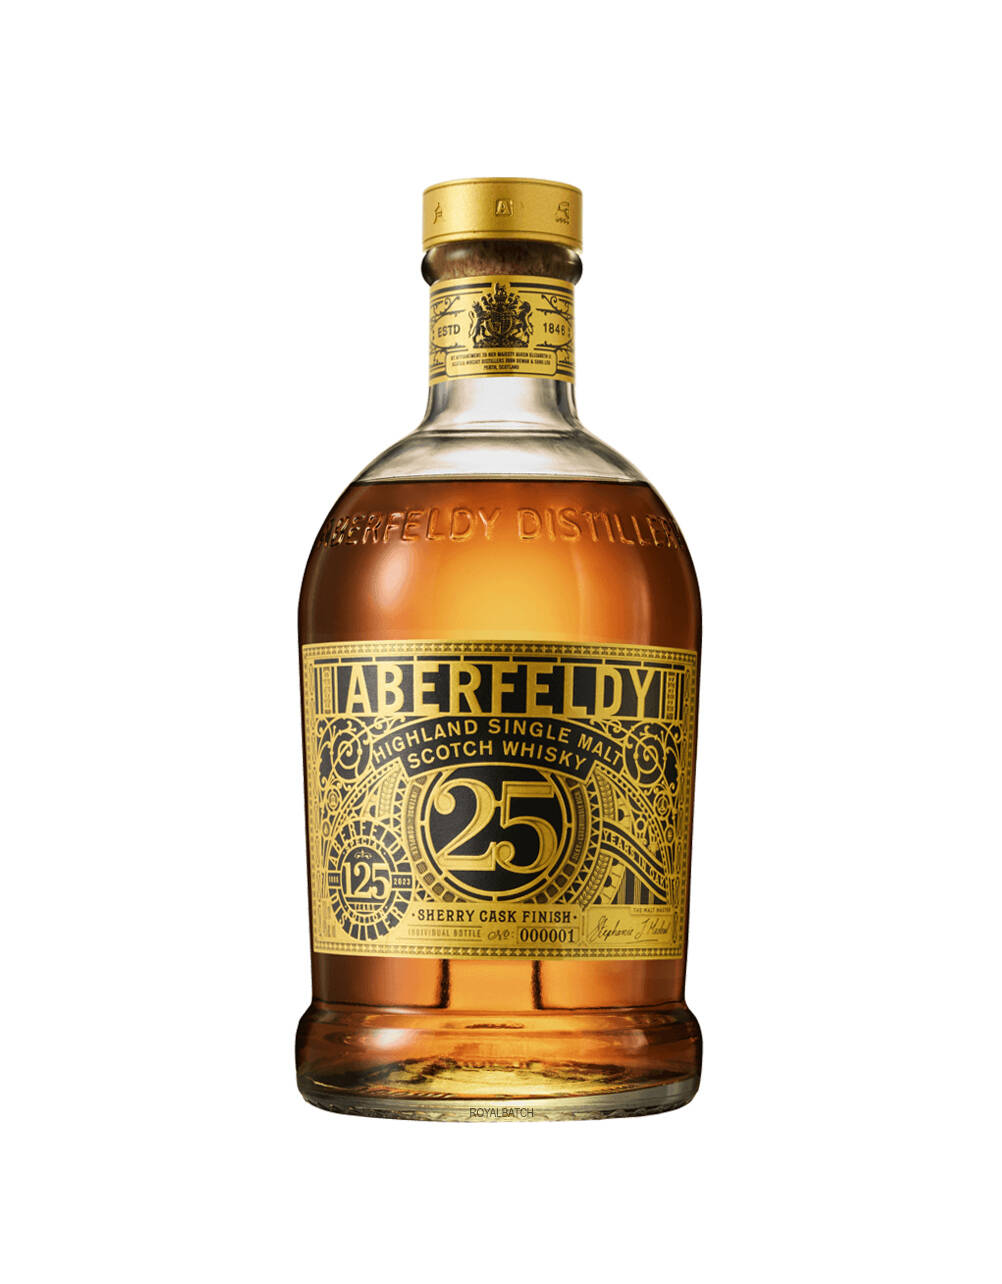 Aberfeldy 25 Year Old Highland Single Malt Scotch Whisky